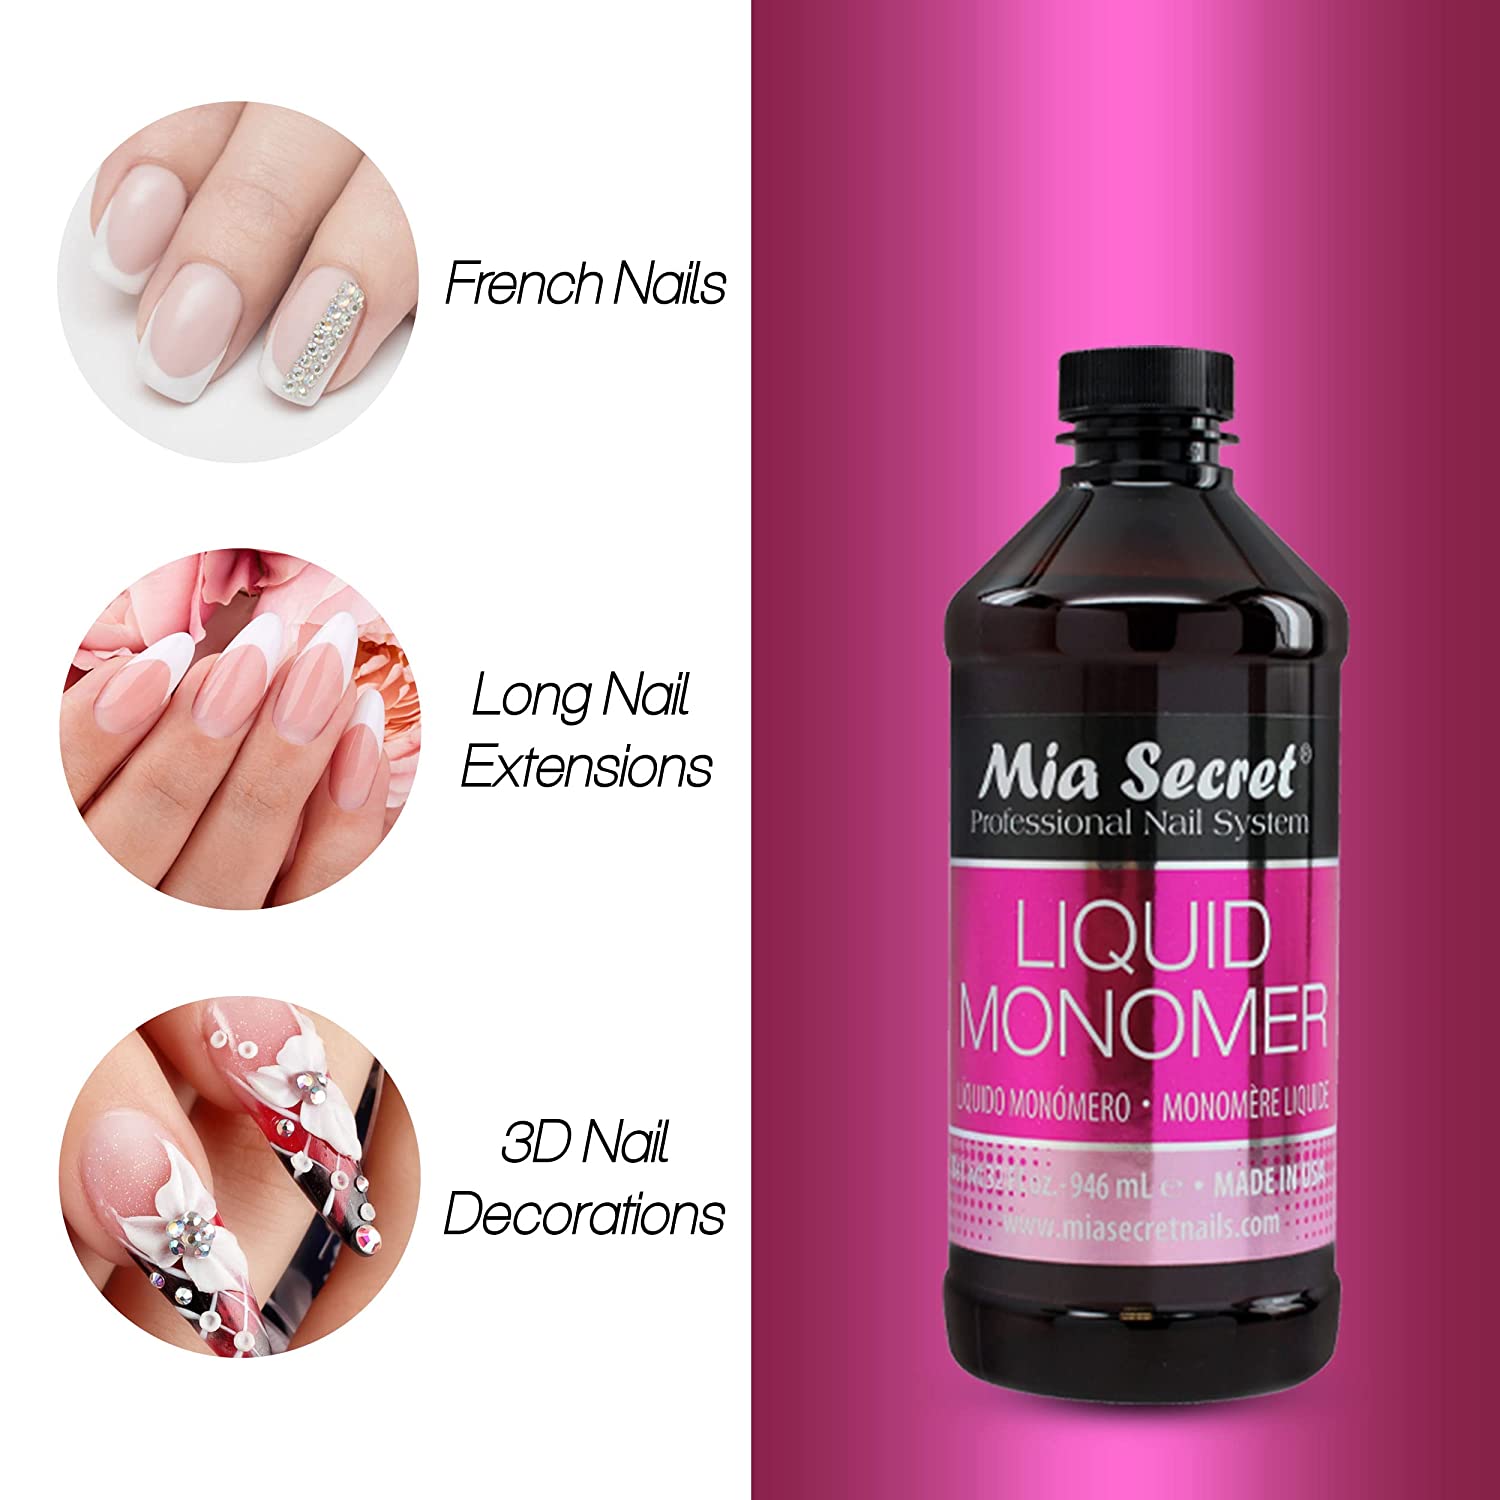  Mia Secret Liquid Monomer - 32oz by Mia Secret sold by DTK Nail Supply